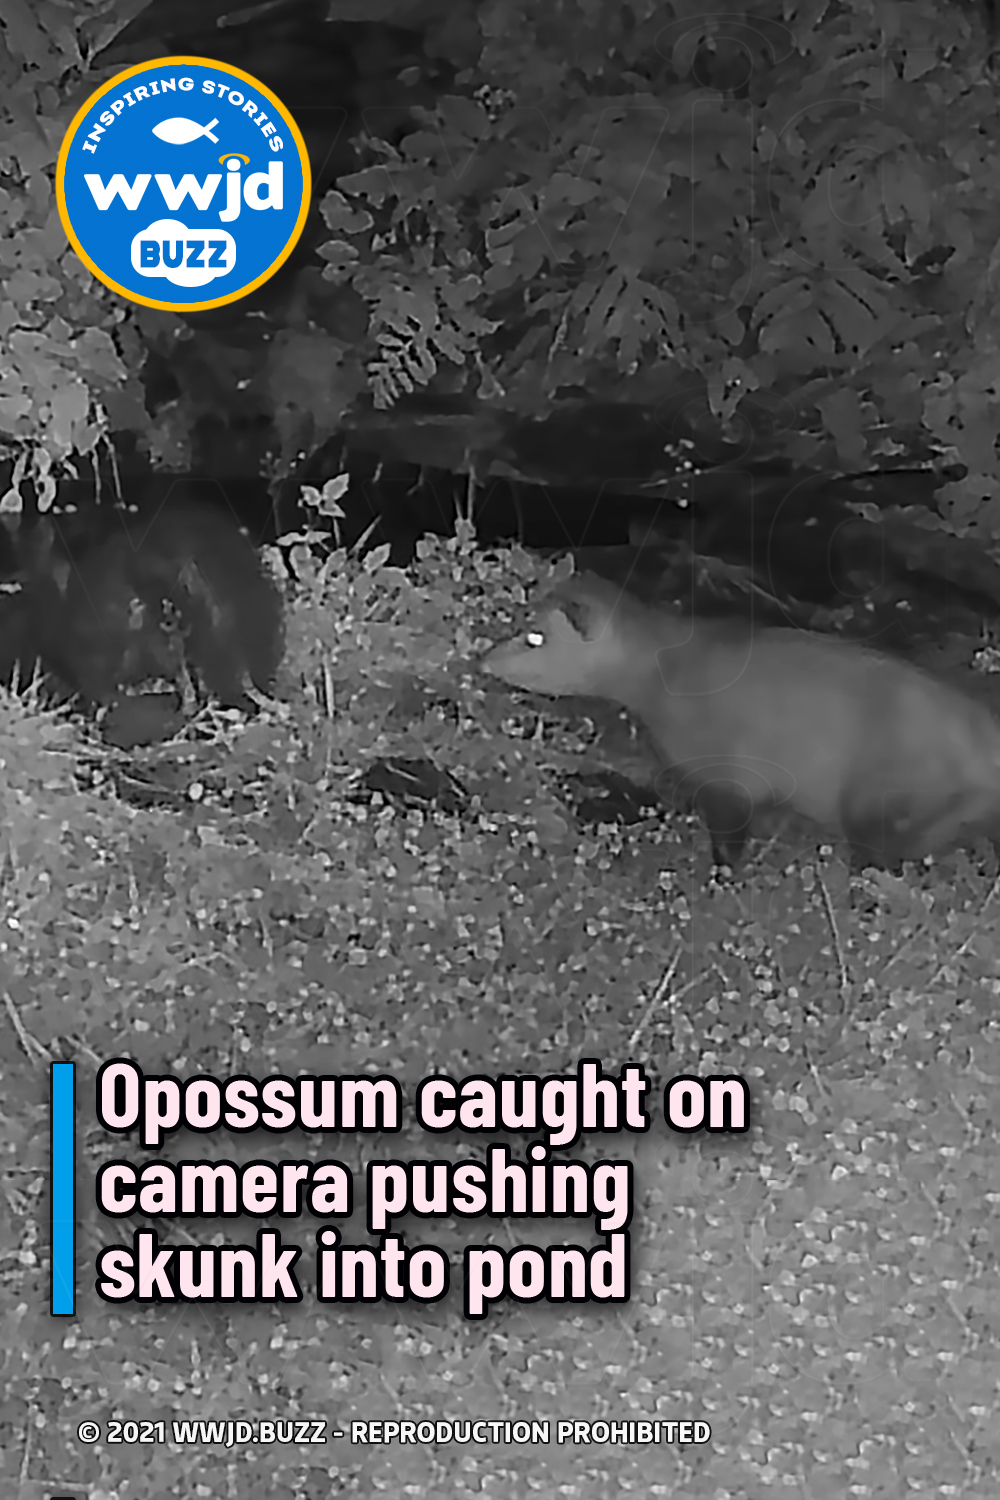 Opossum caught on camera pushing skunk into pond